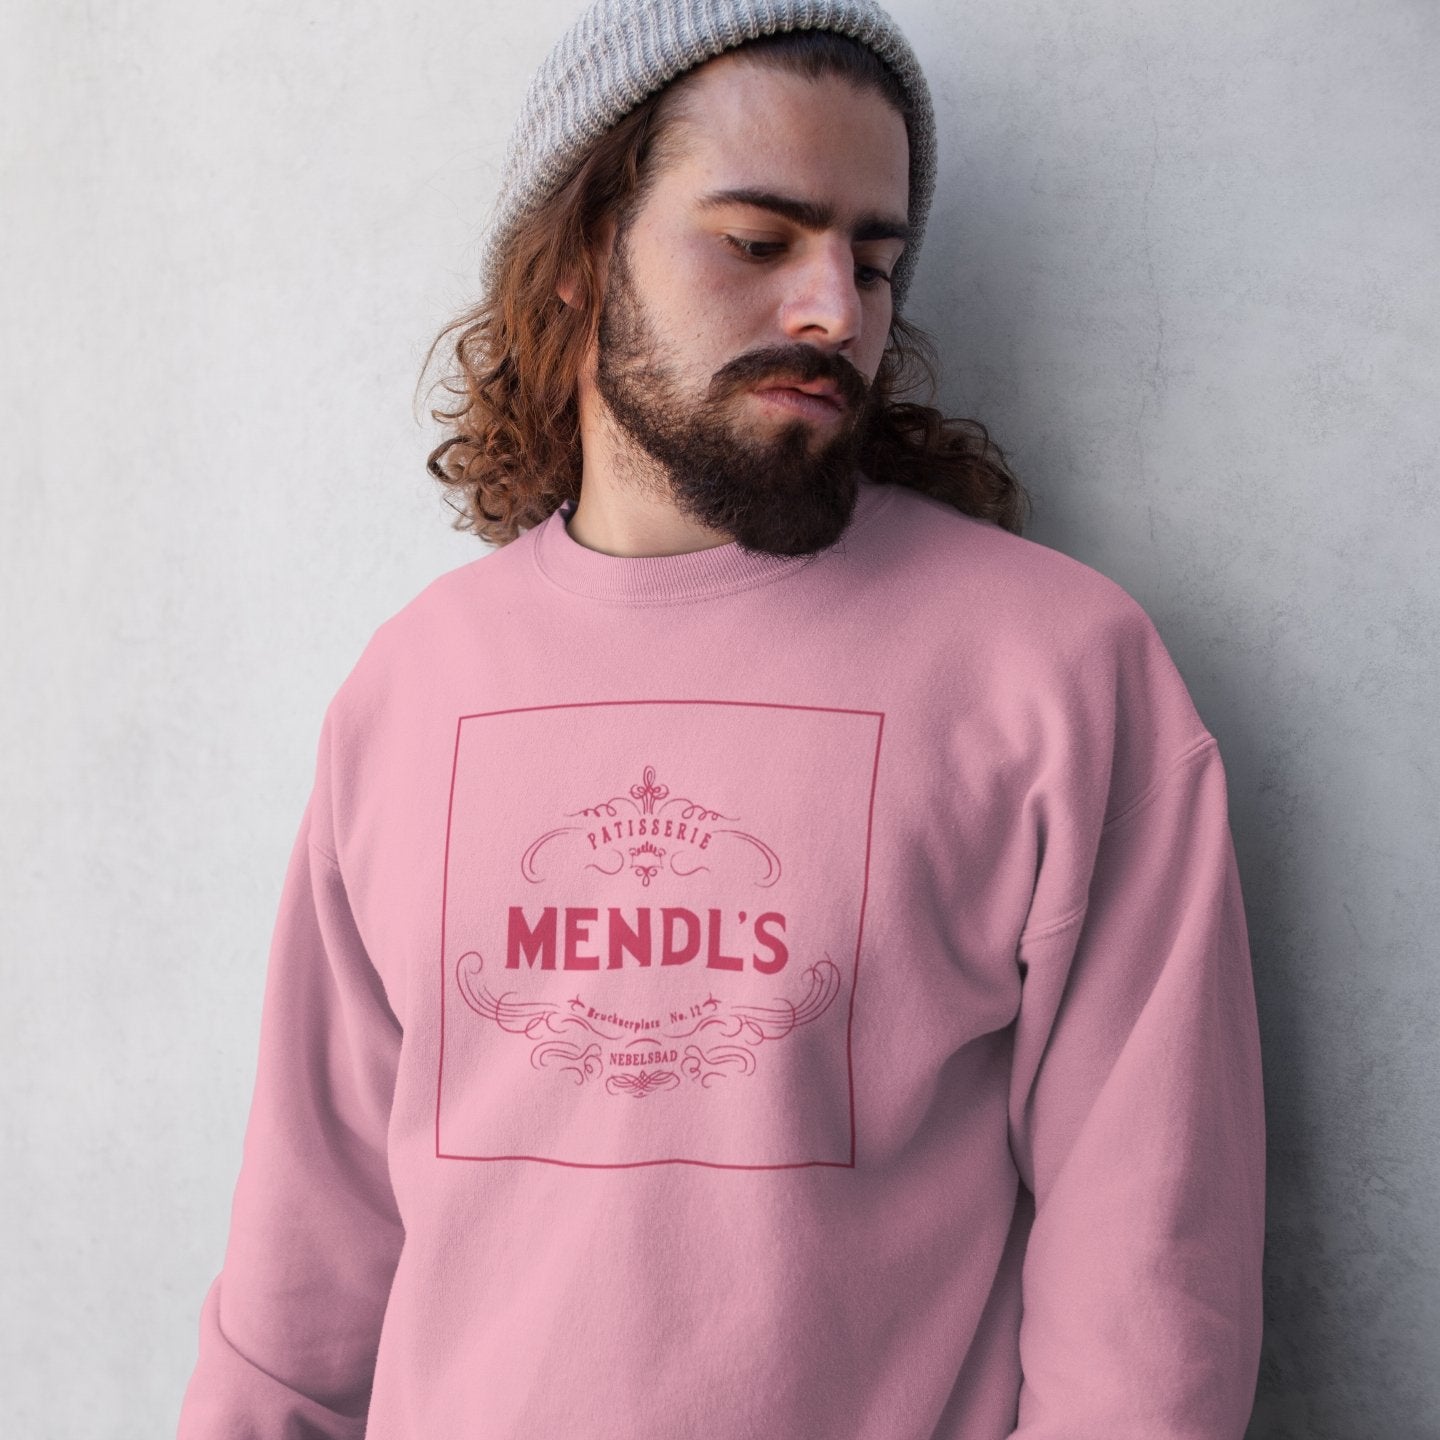 Mendl's The Grand Budapest Hotel - Sweatshirt